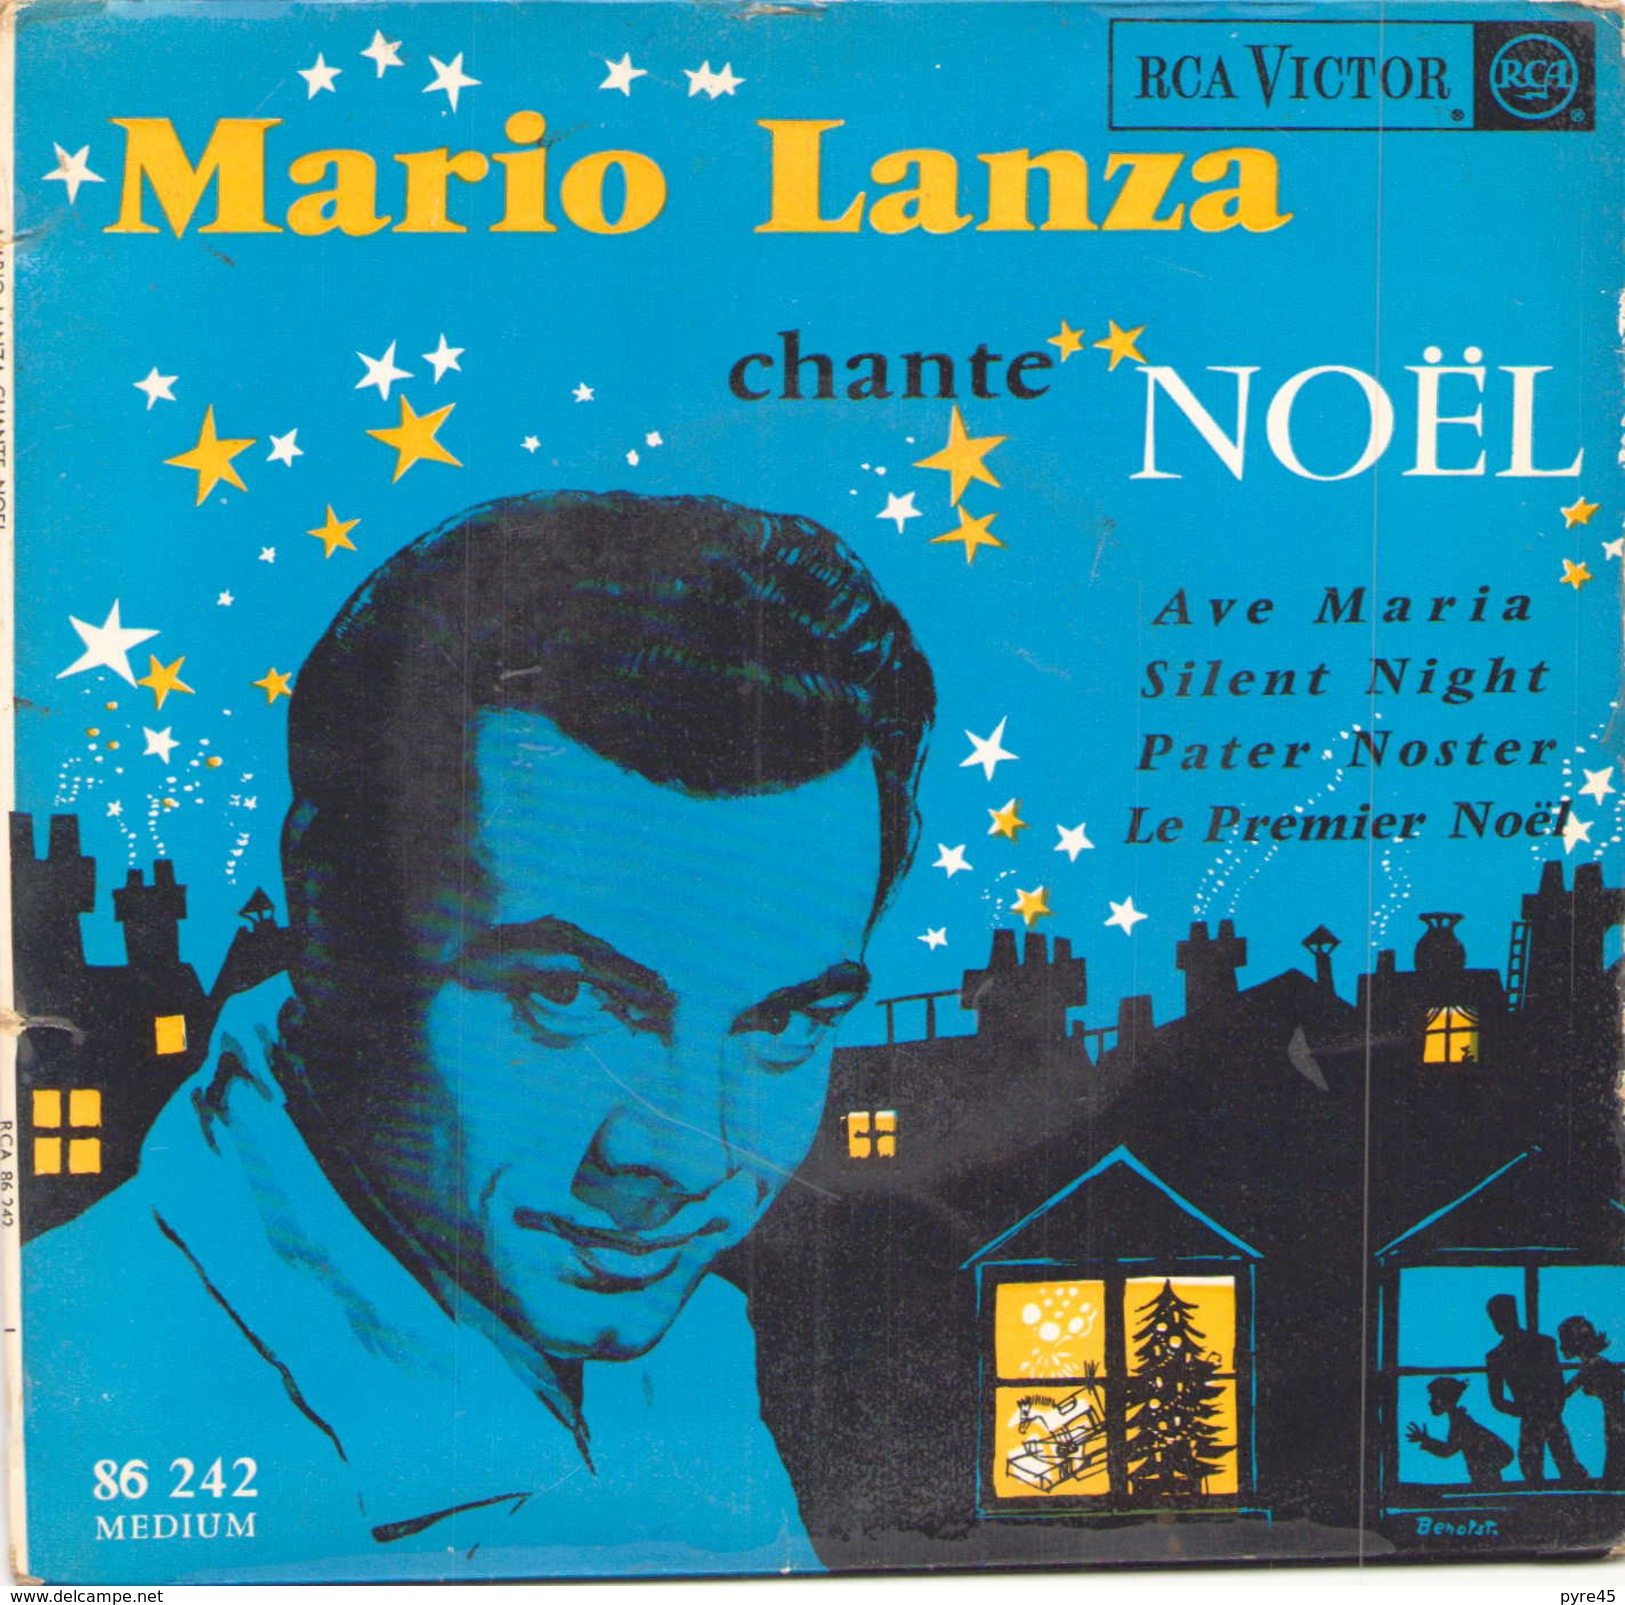 45 TOURS EP MARIO LANZA CHANTE NOEL AVE MARIA / SILENT NIGHT / PATER NOSTER / LE PREMIER NOEL RCA 86242 - Christmas Carols